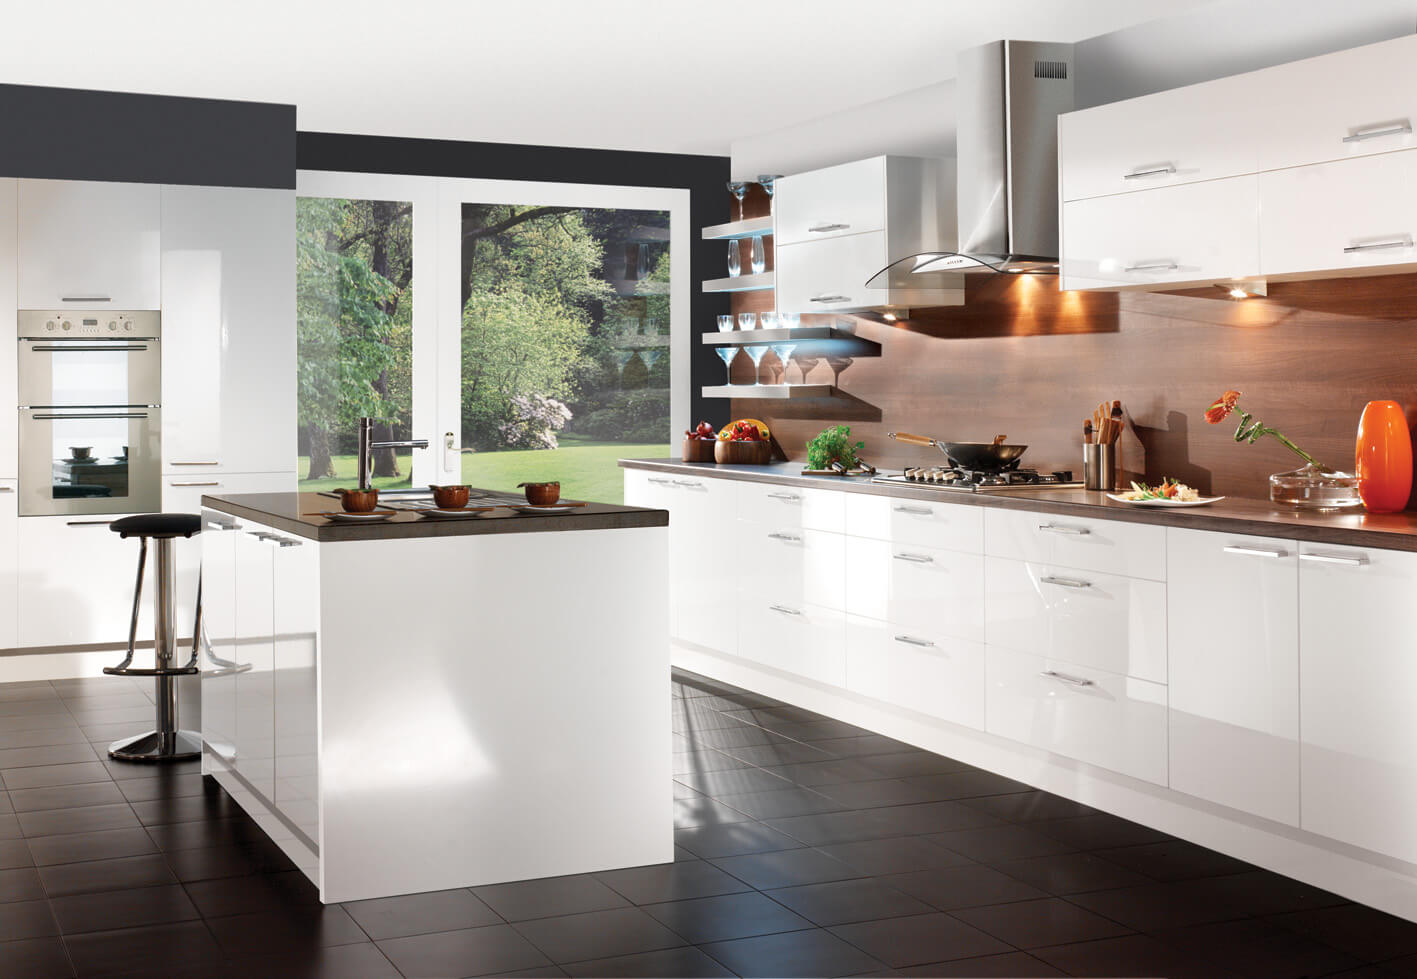 How to Create a Minimalist Kitchen – Interior Design, Design News and